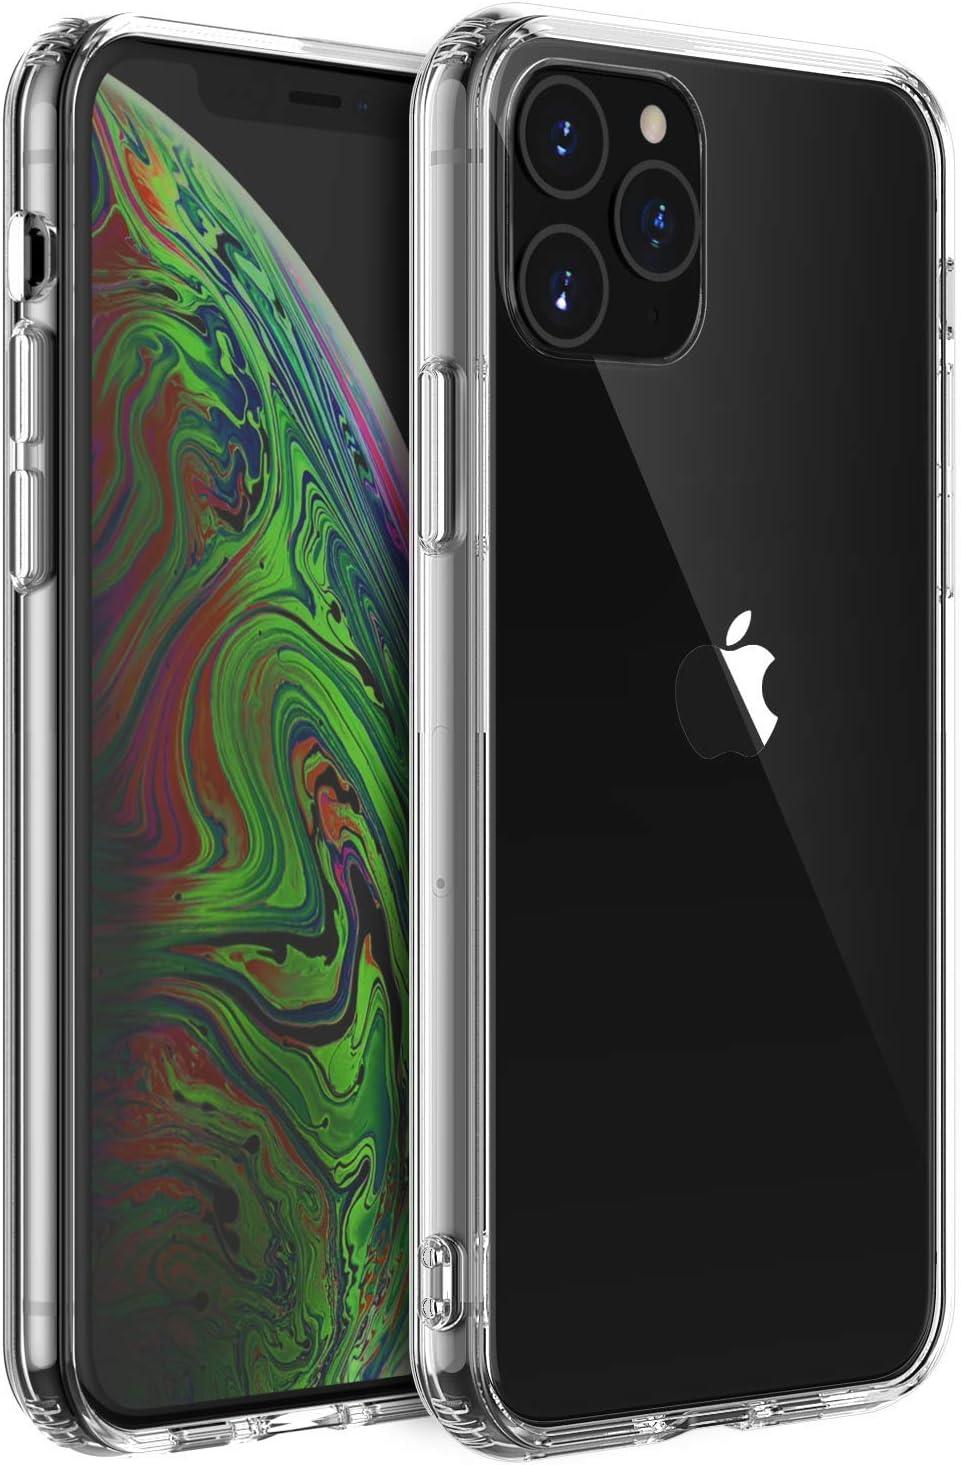 Protector iPhone X XS Alto Impacto Borde Color - Tubelux